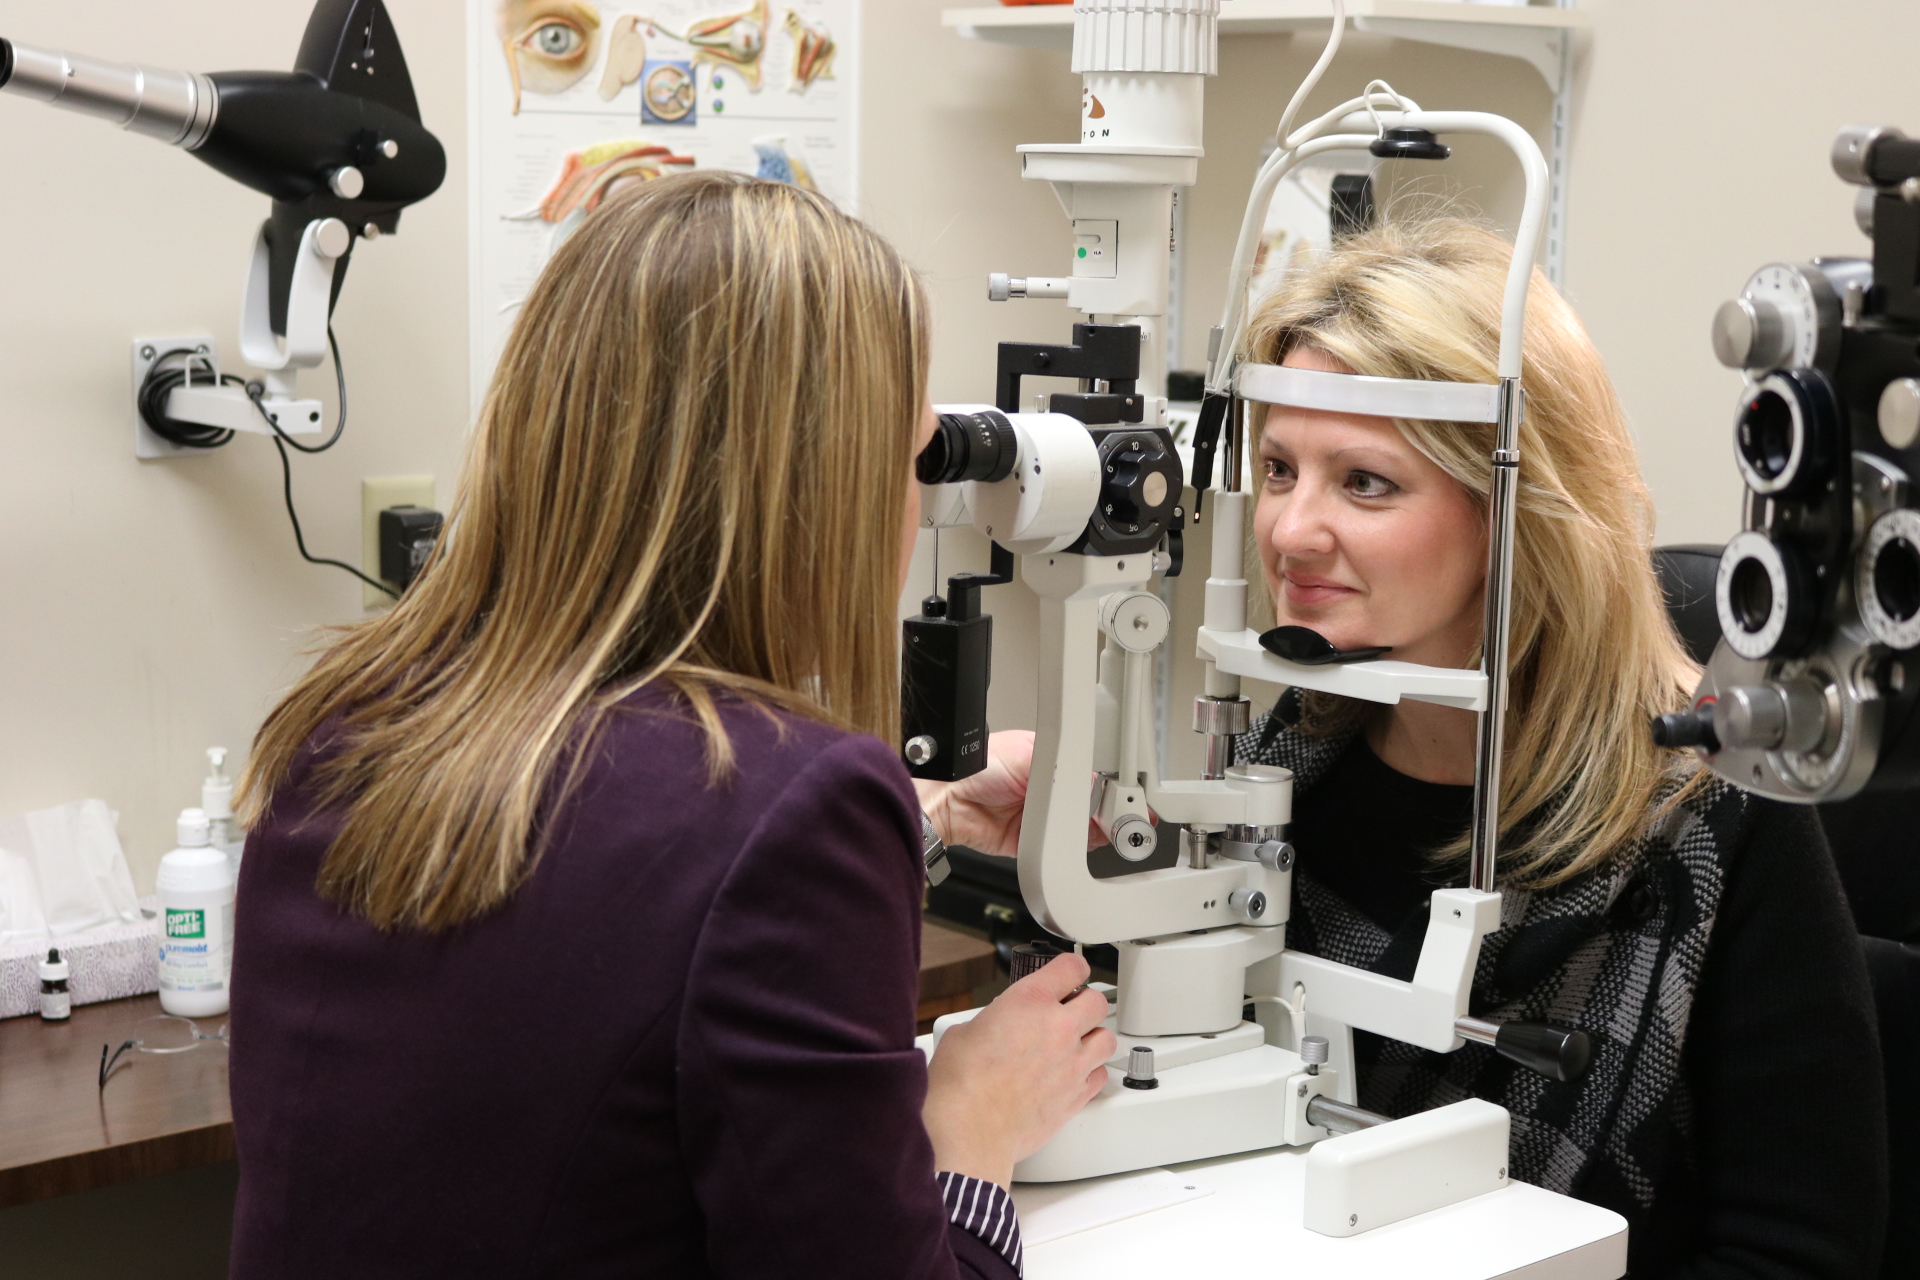 We offer routine eye exams. Ohio State Optical Lewis Center (614)888-3972